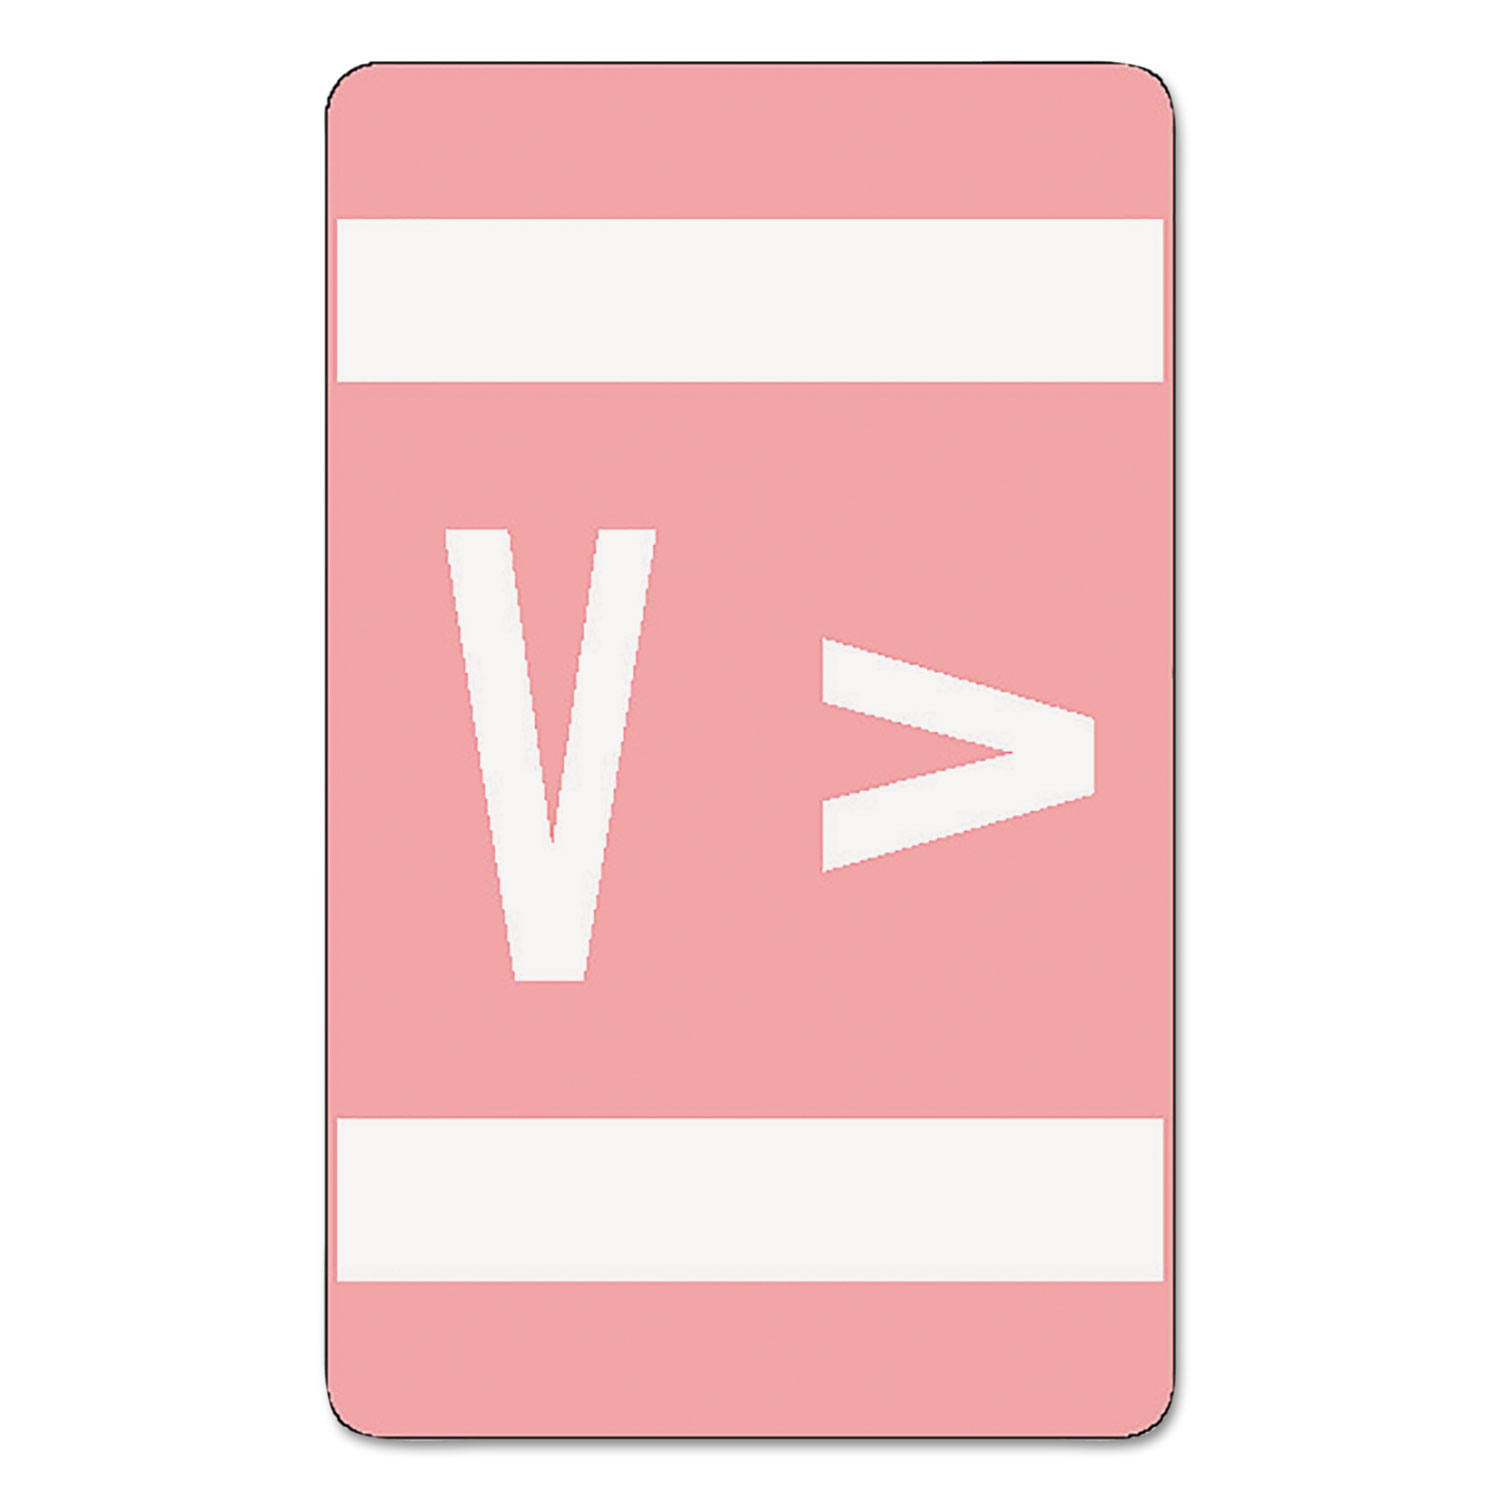  Smead 67192 AlphaZ Color-Coded Second Letter Alphabetical Labels, V, 1 x 1.63, Pink, 10/Sheet, 10 Sheets/Pack (SMD67192) 